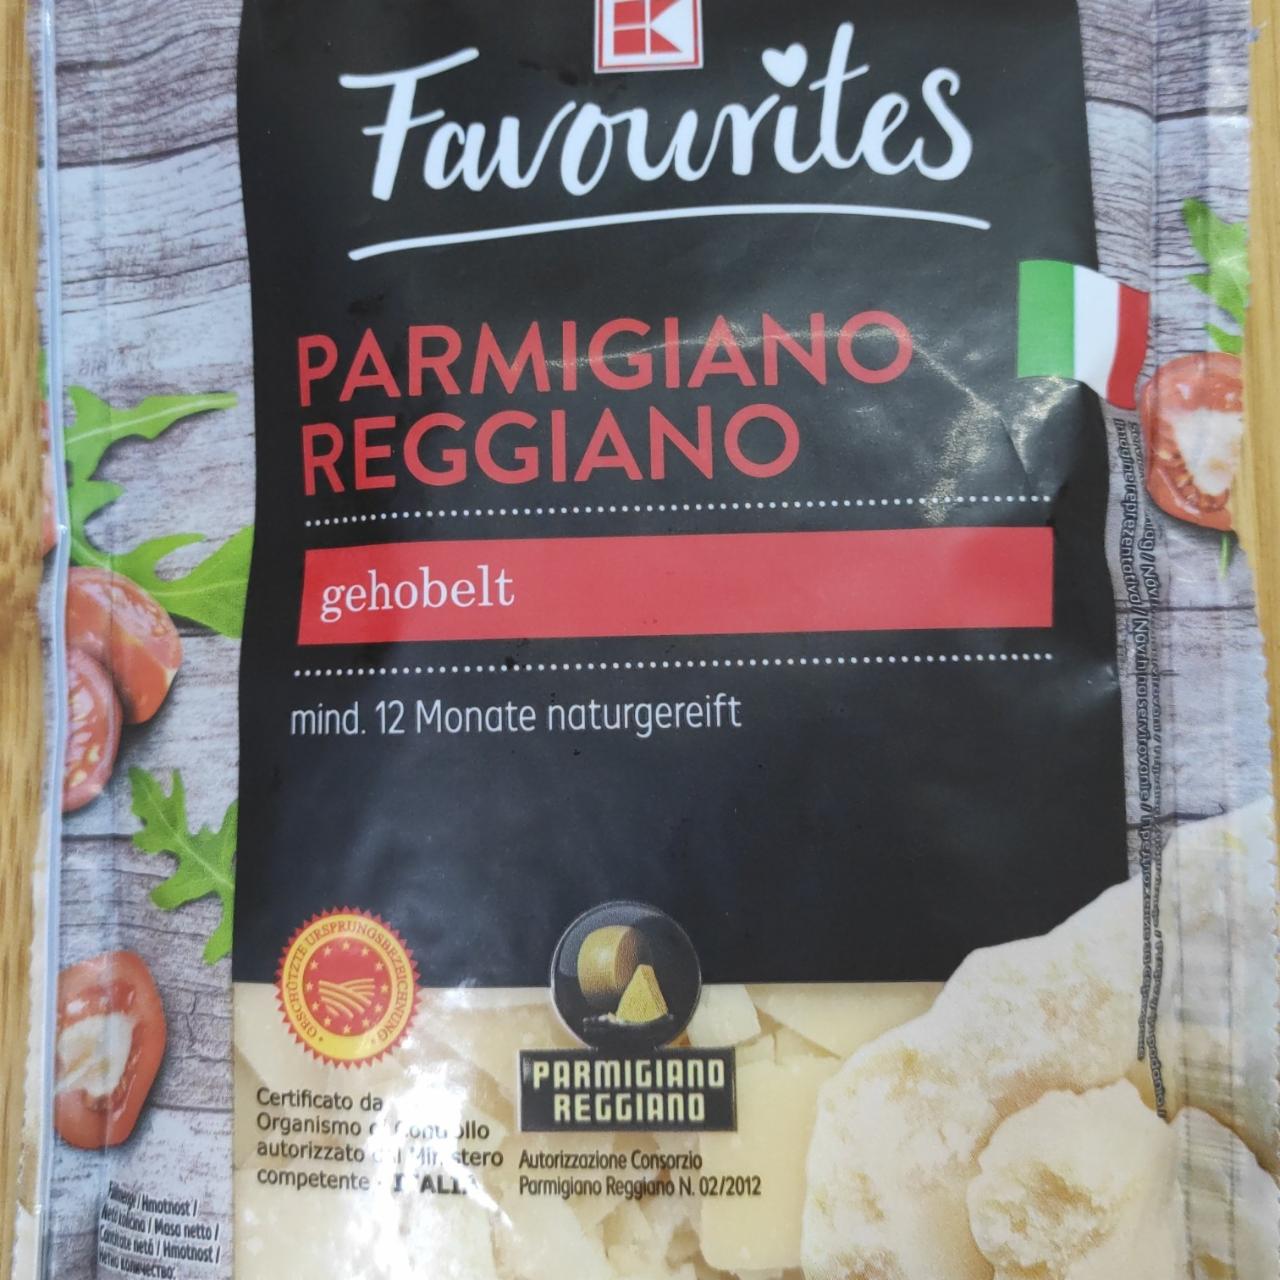 Fotografie - Parmigiano Reggiano gehobelt K-Favourites